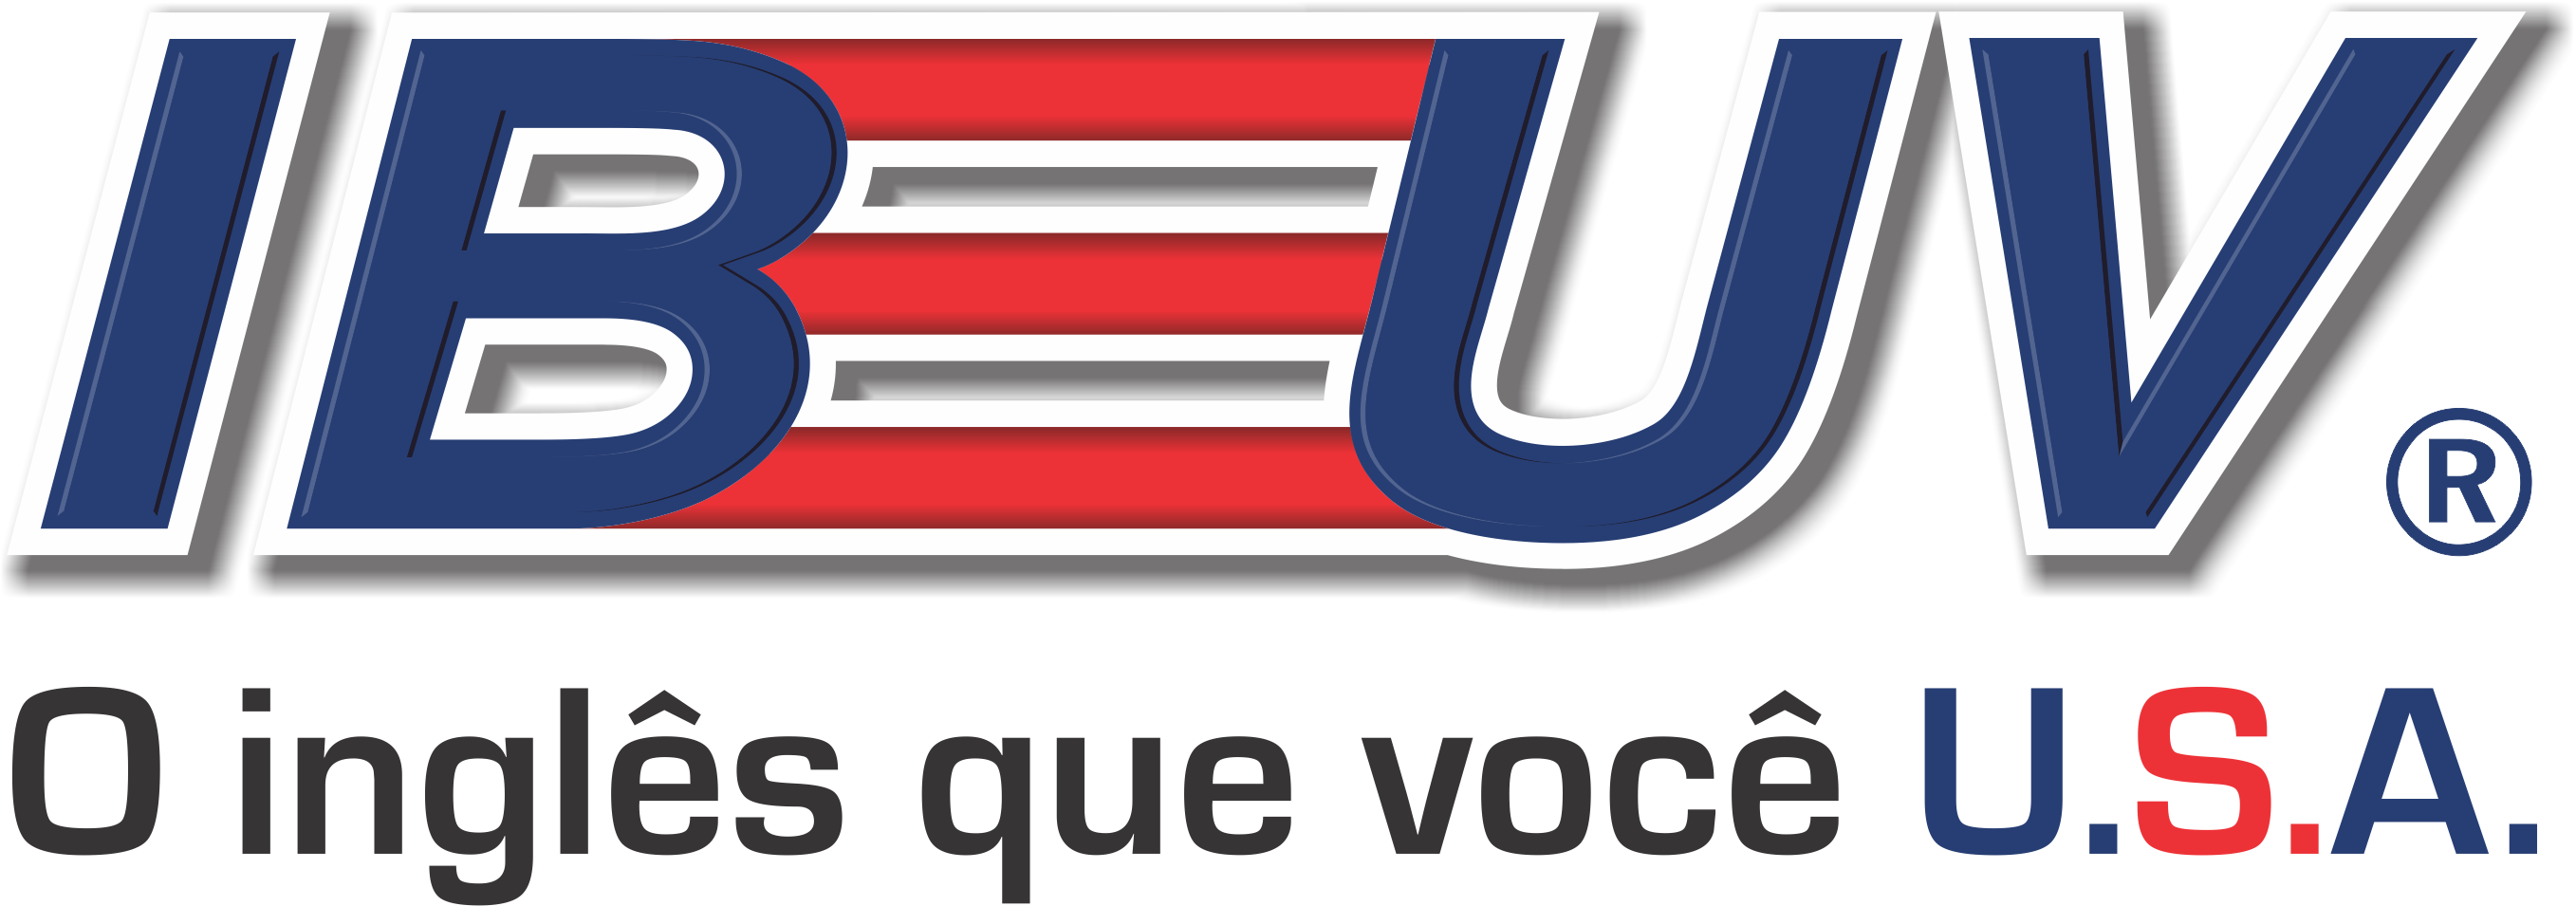 Logo 4 cores IBEUV.png